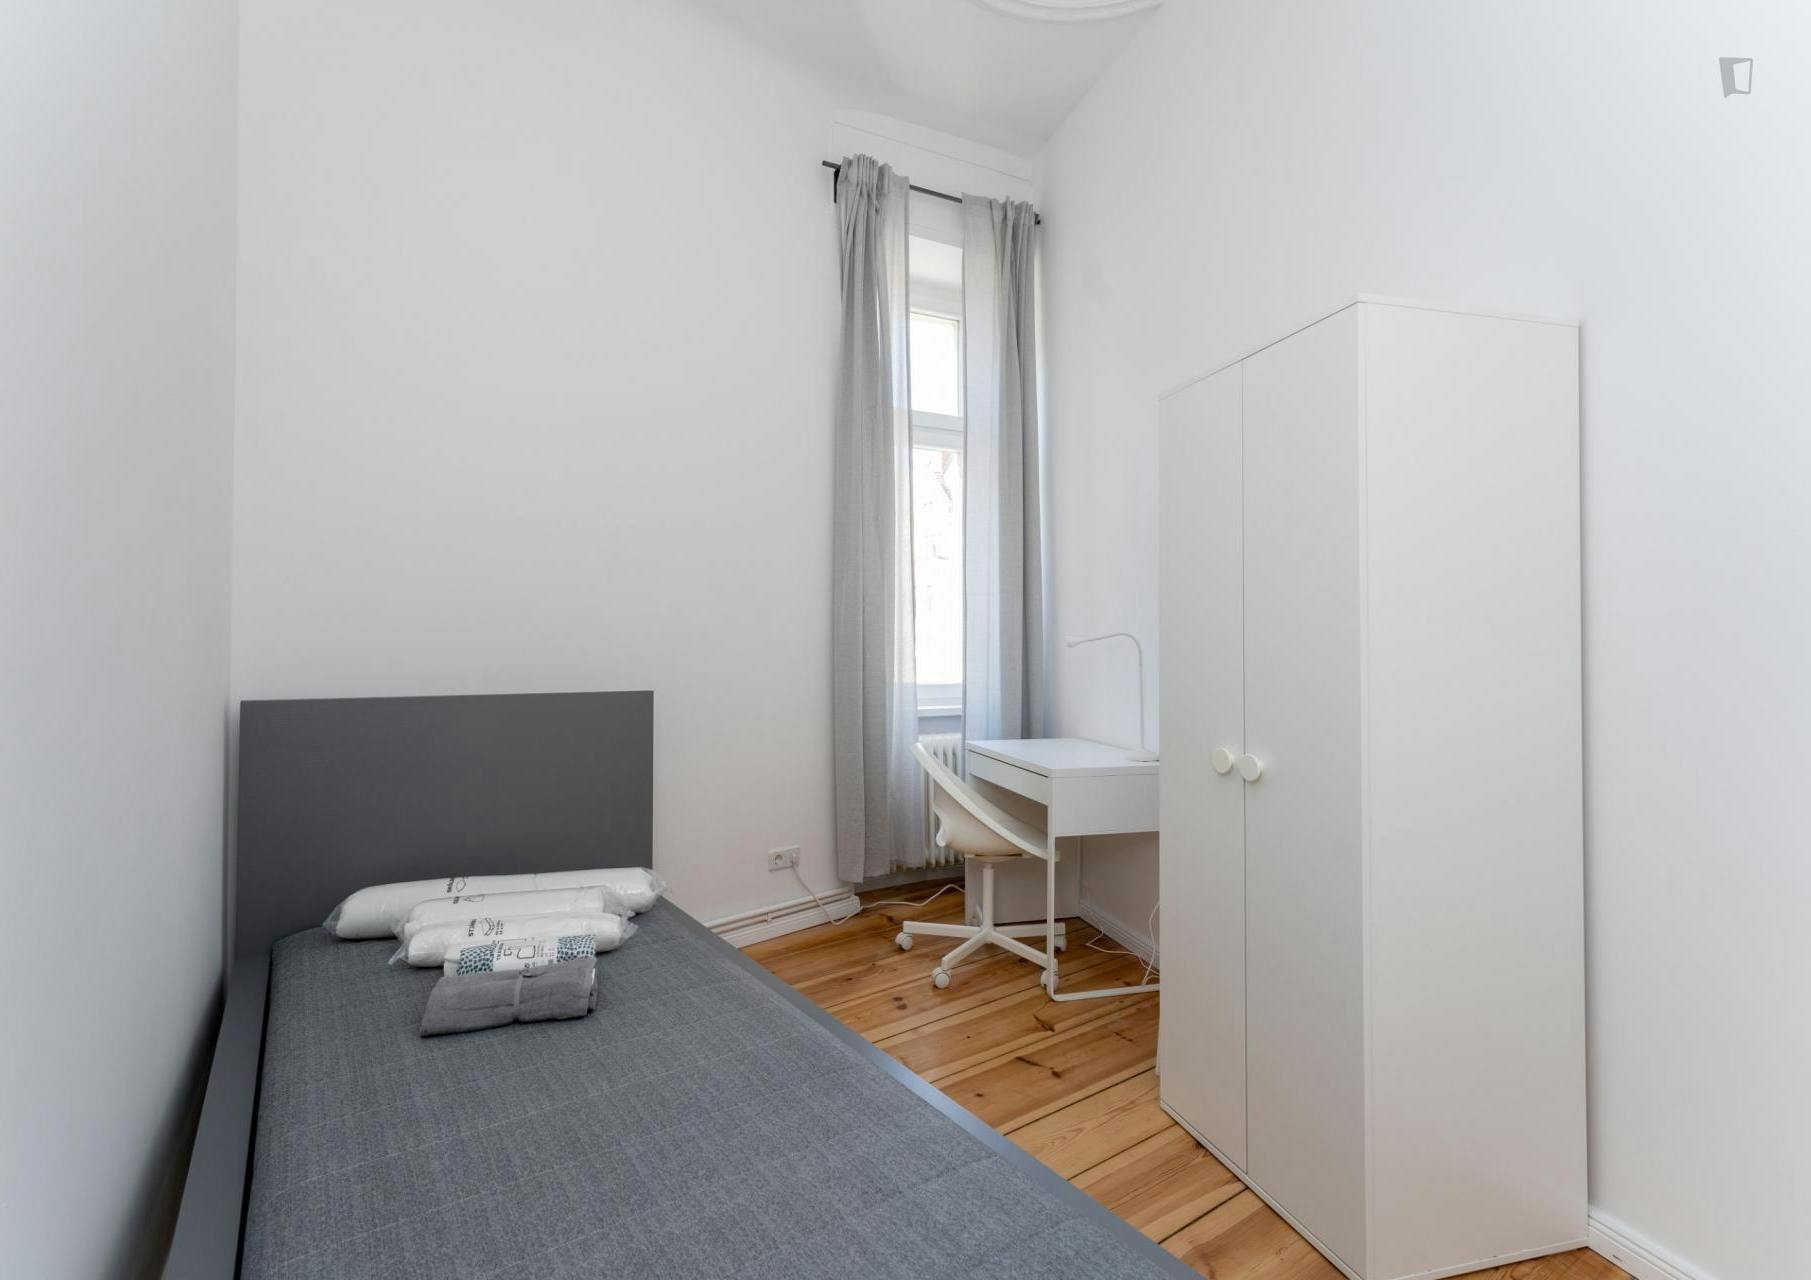 Single bedroom in an 8-bedroom flat, in Neukölln